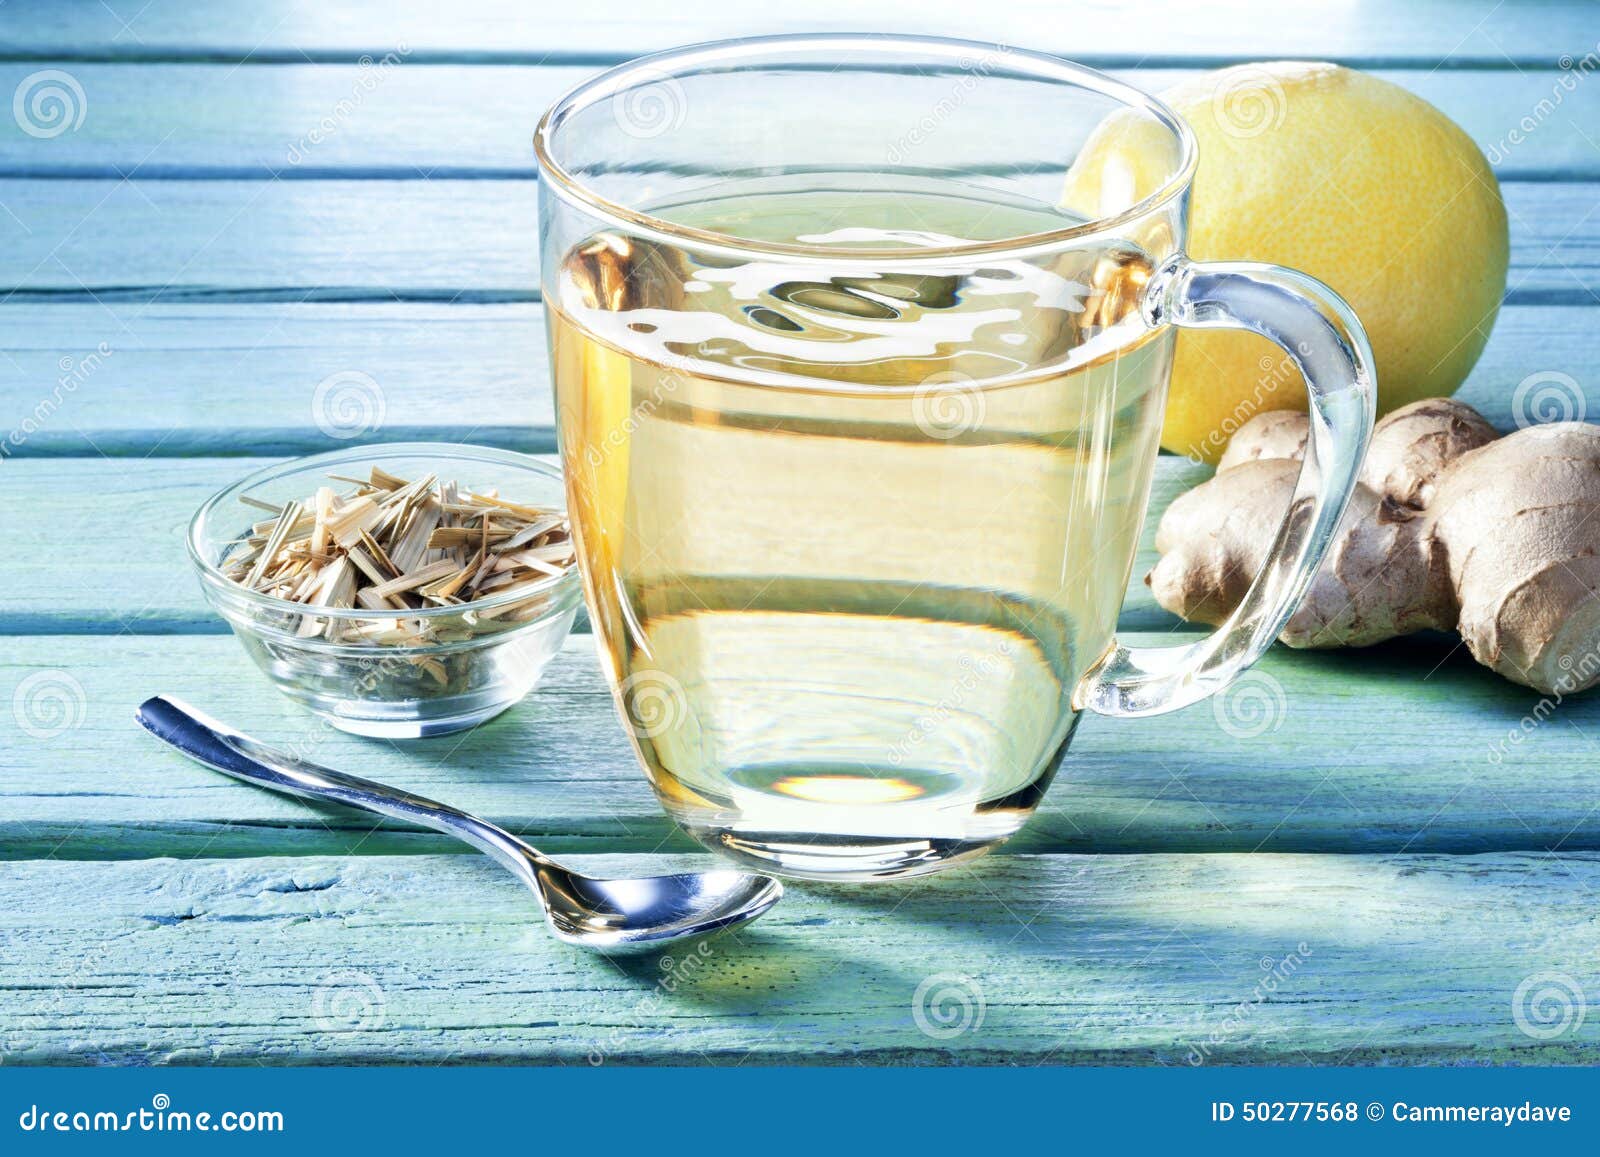 ginger lemon tea cup